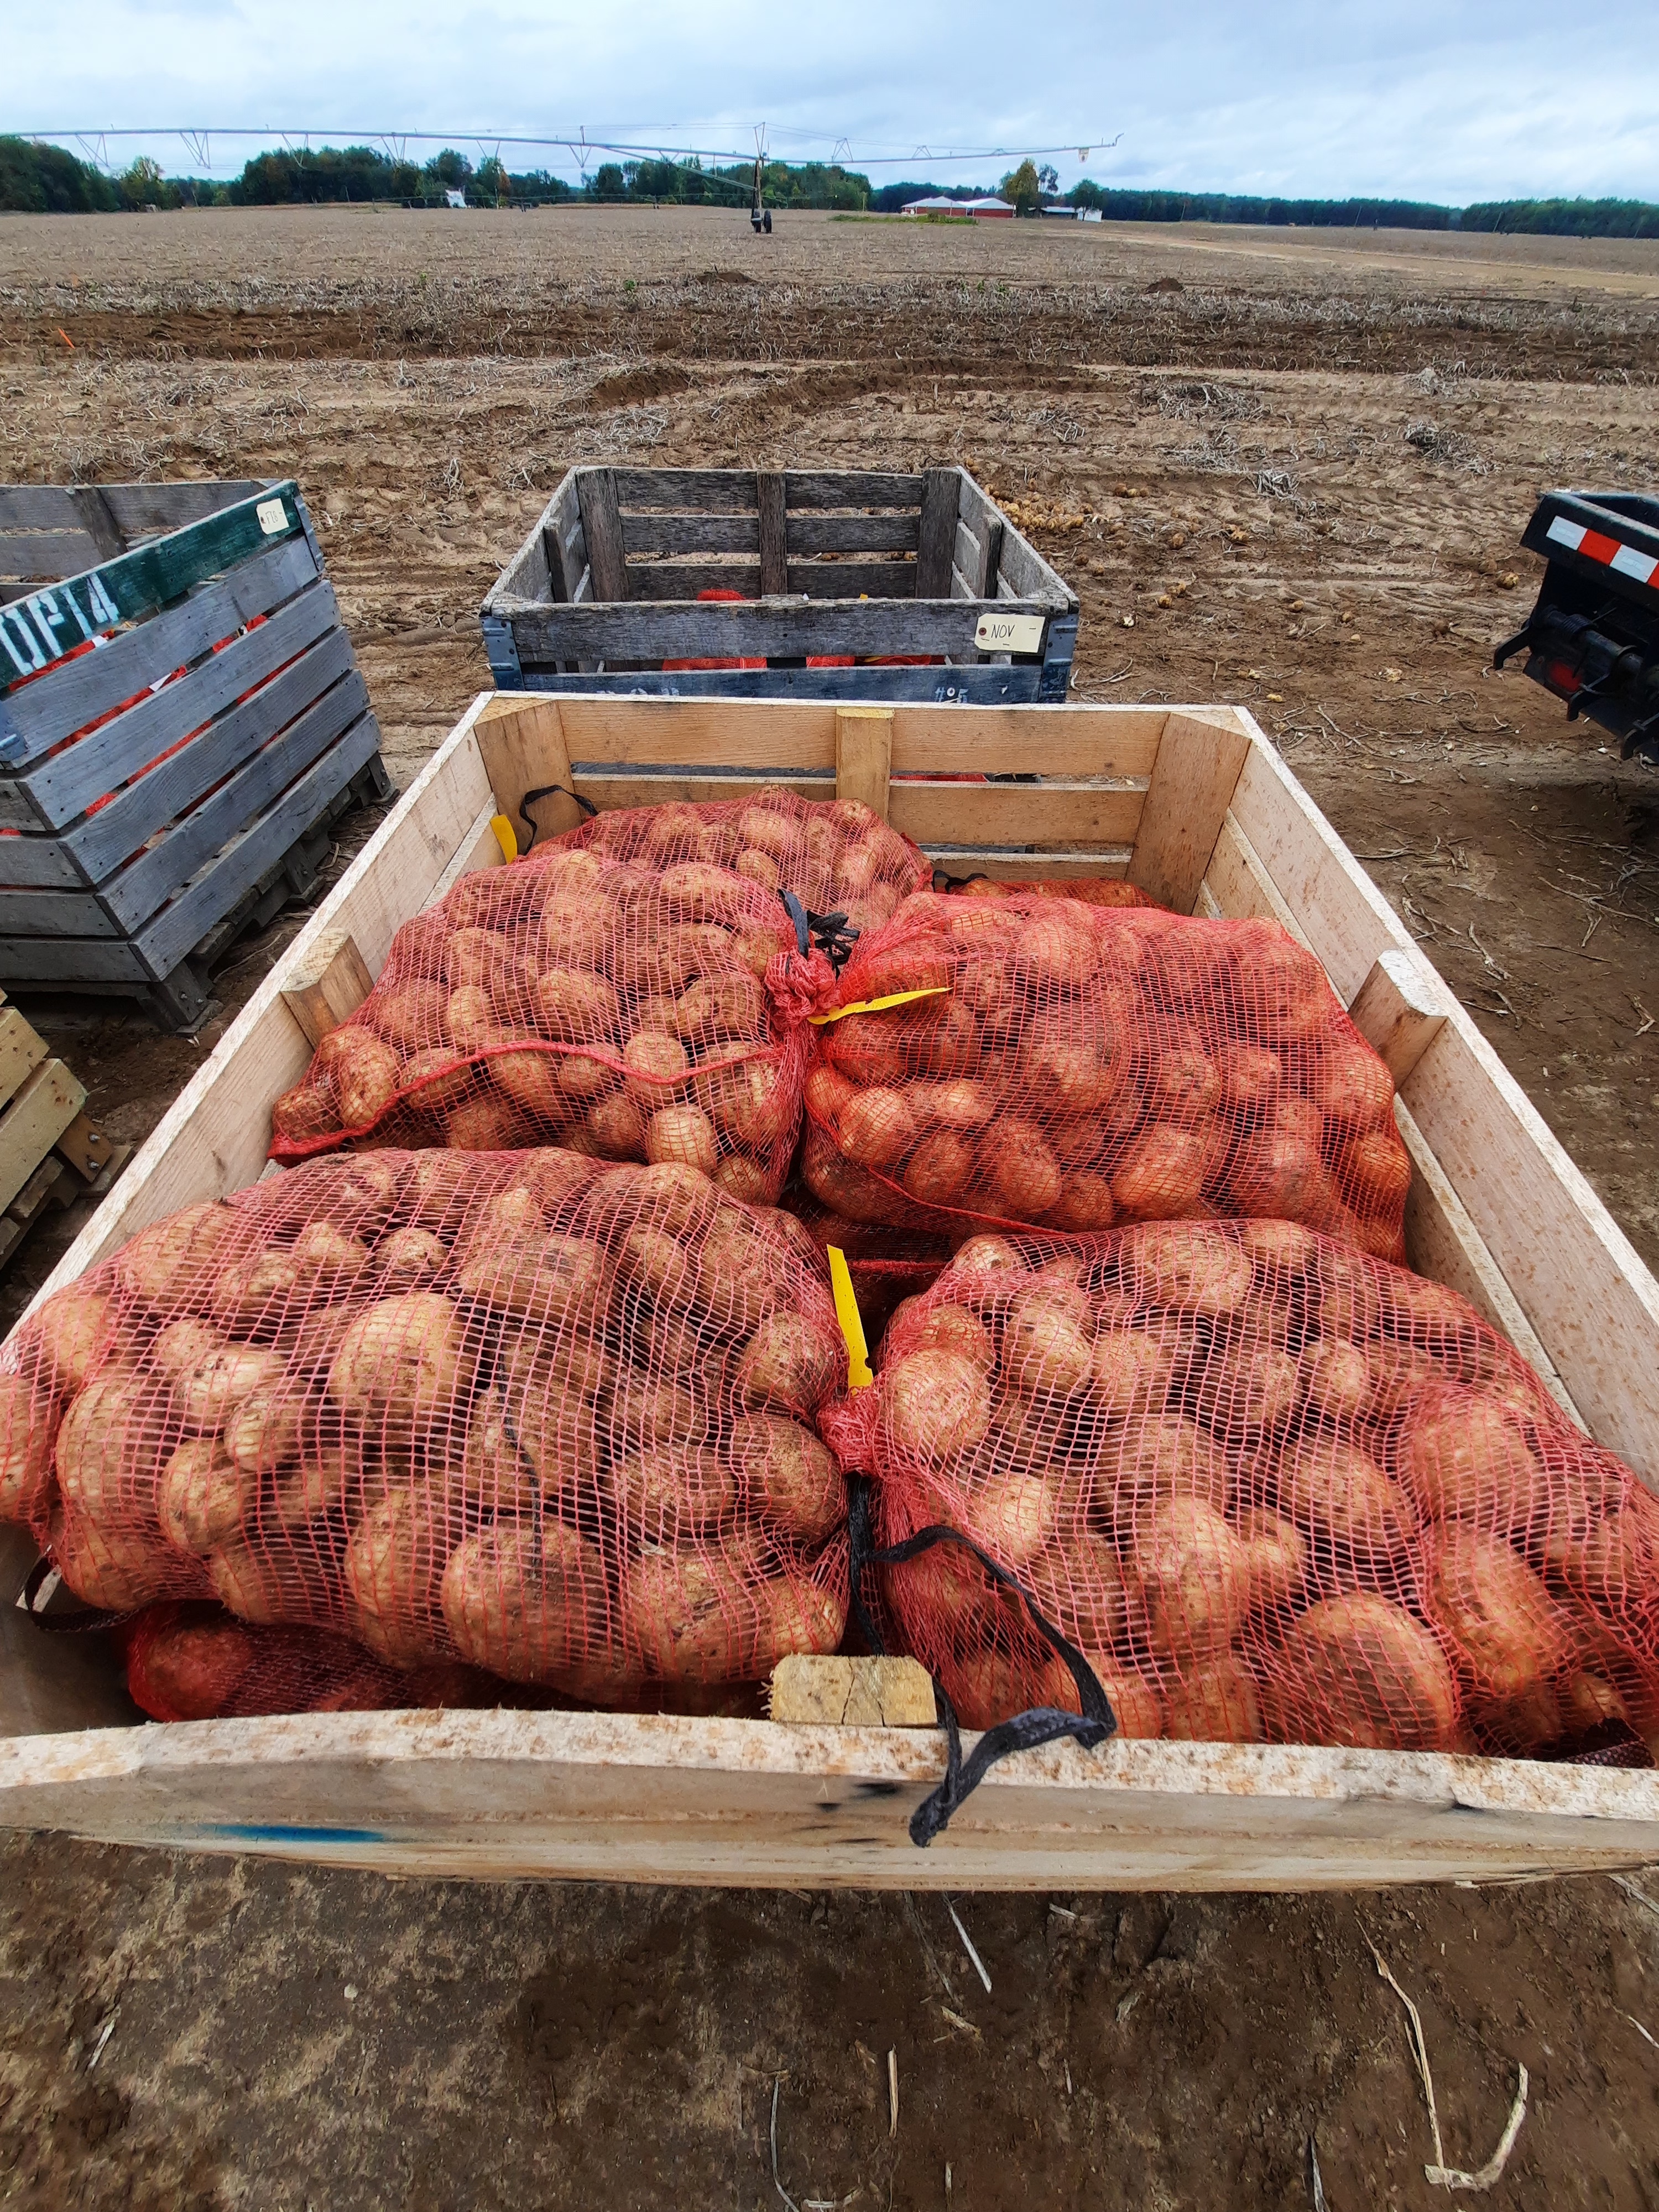 Bins full of harvest potatoes.